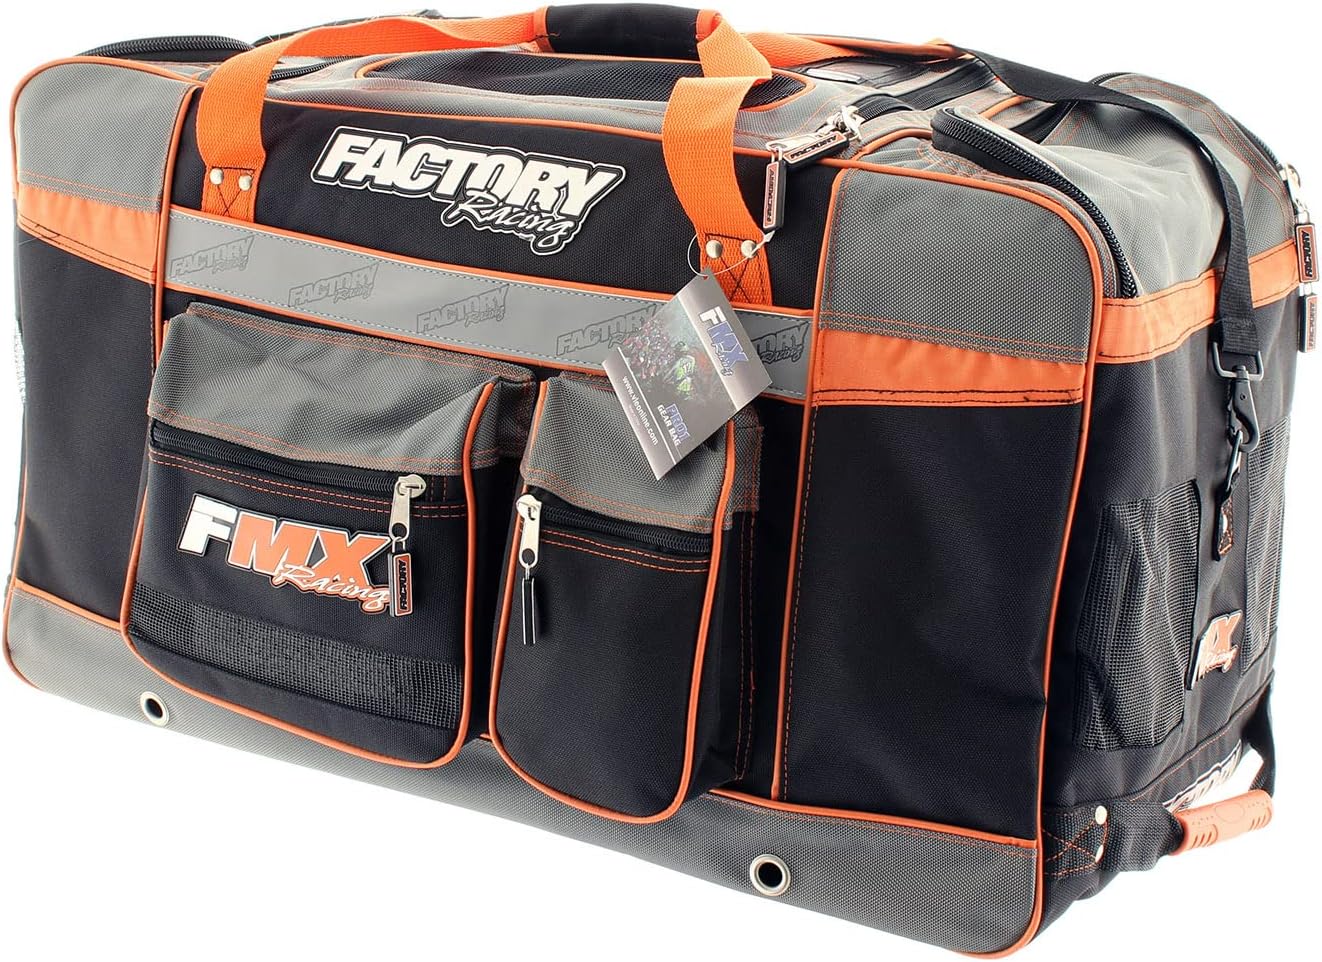 Factory FMX Motocross Gear Bag X-Large Orange - Click Image to Close